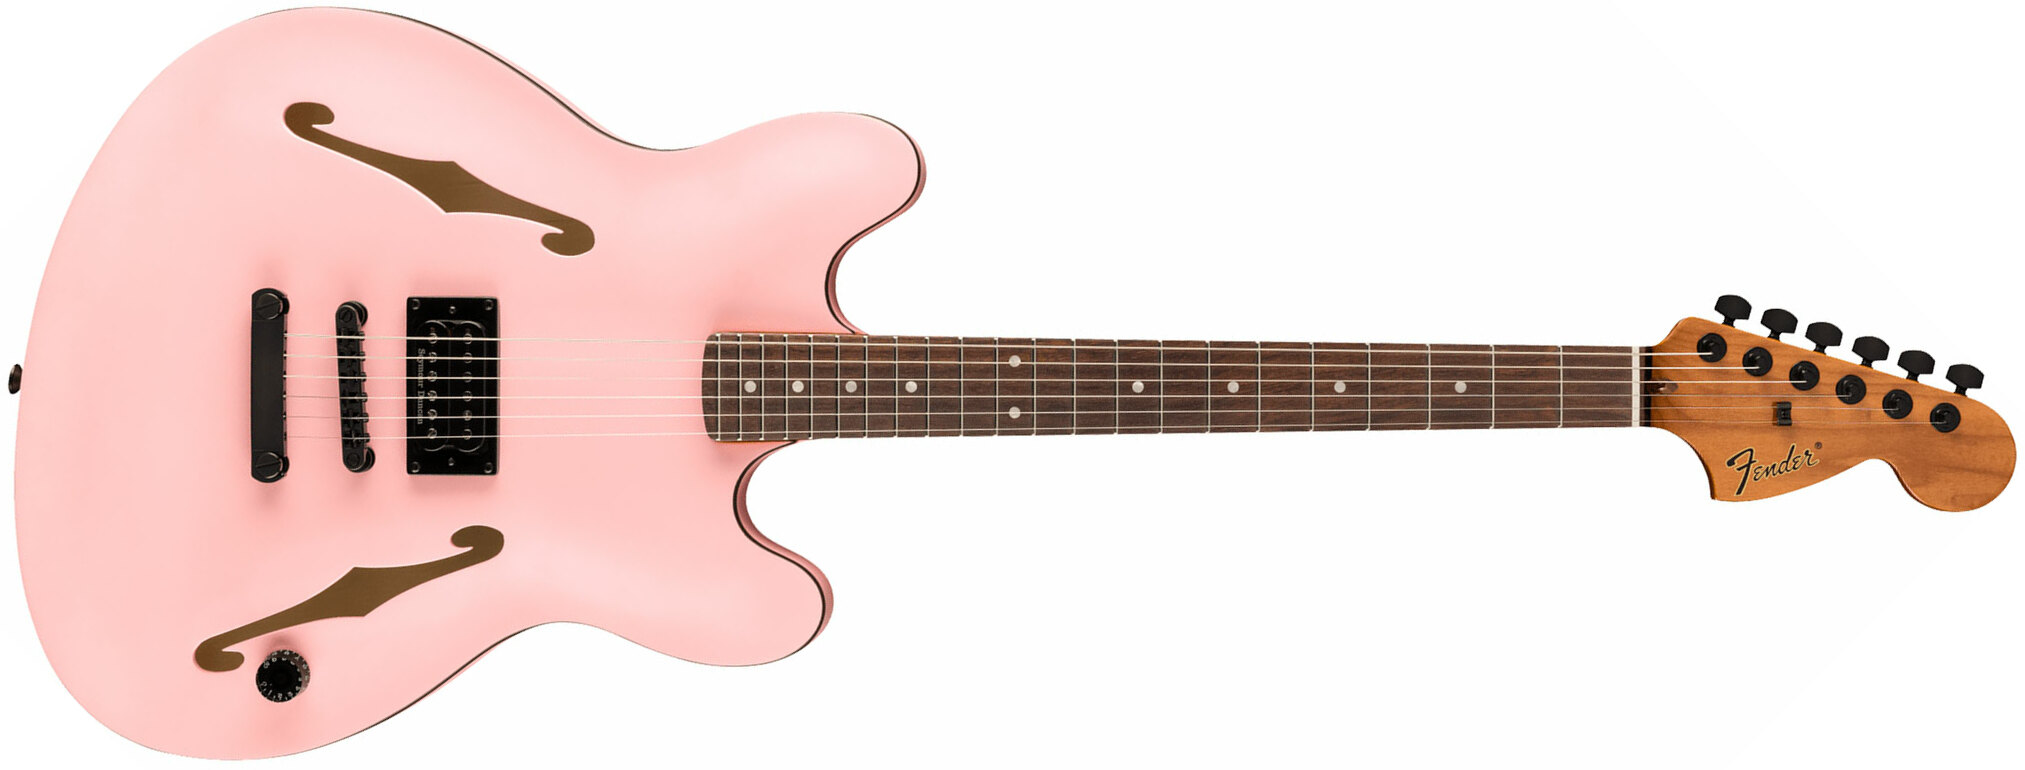 Fender Tom Delonge Starcaster Signature 1h Seymour Duncan Ht Rw - Satin Shell Pink - Guitarra eléctrica semi caja - Main picture